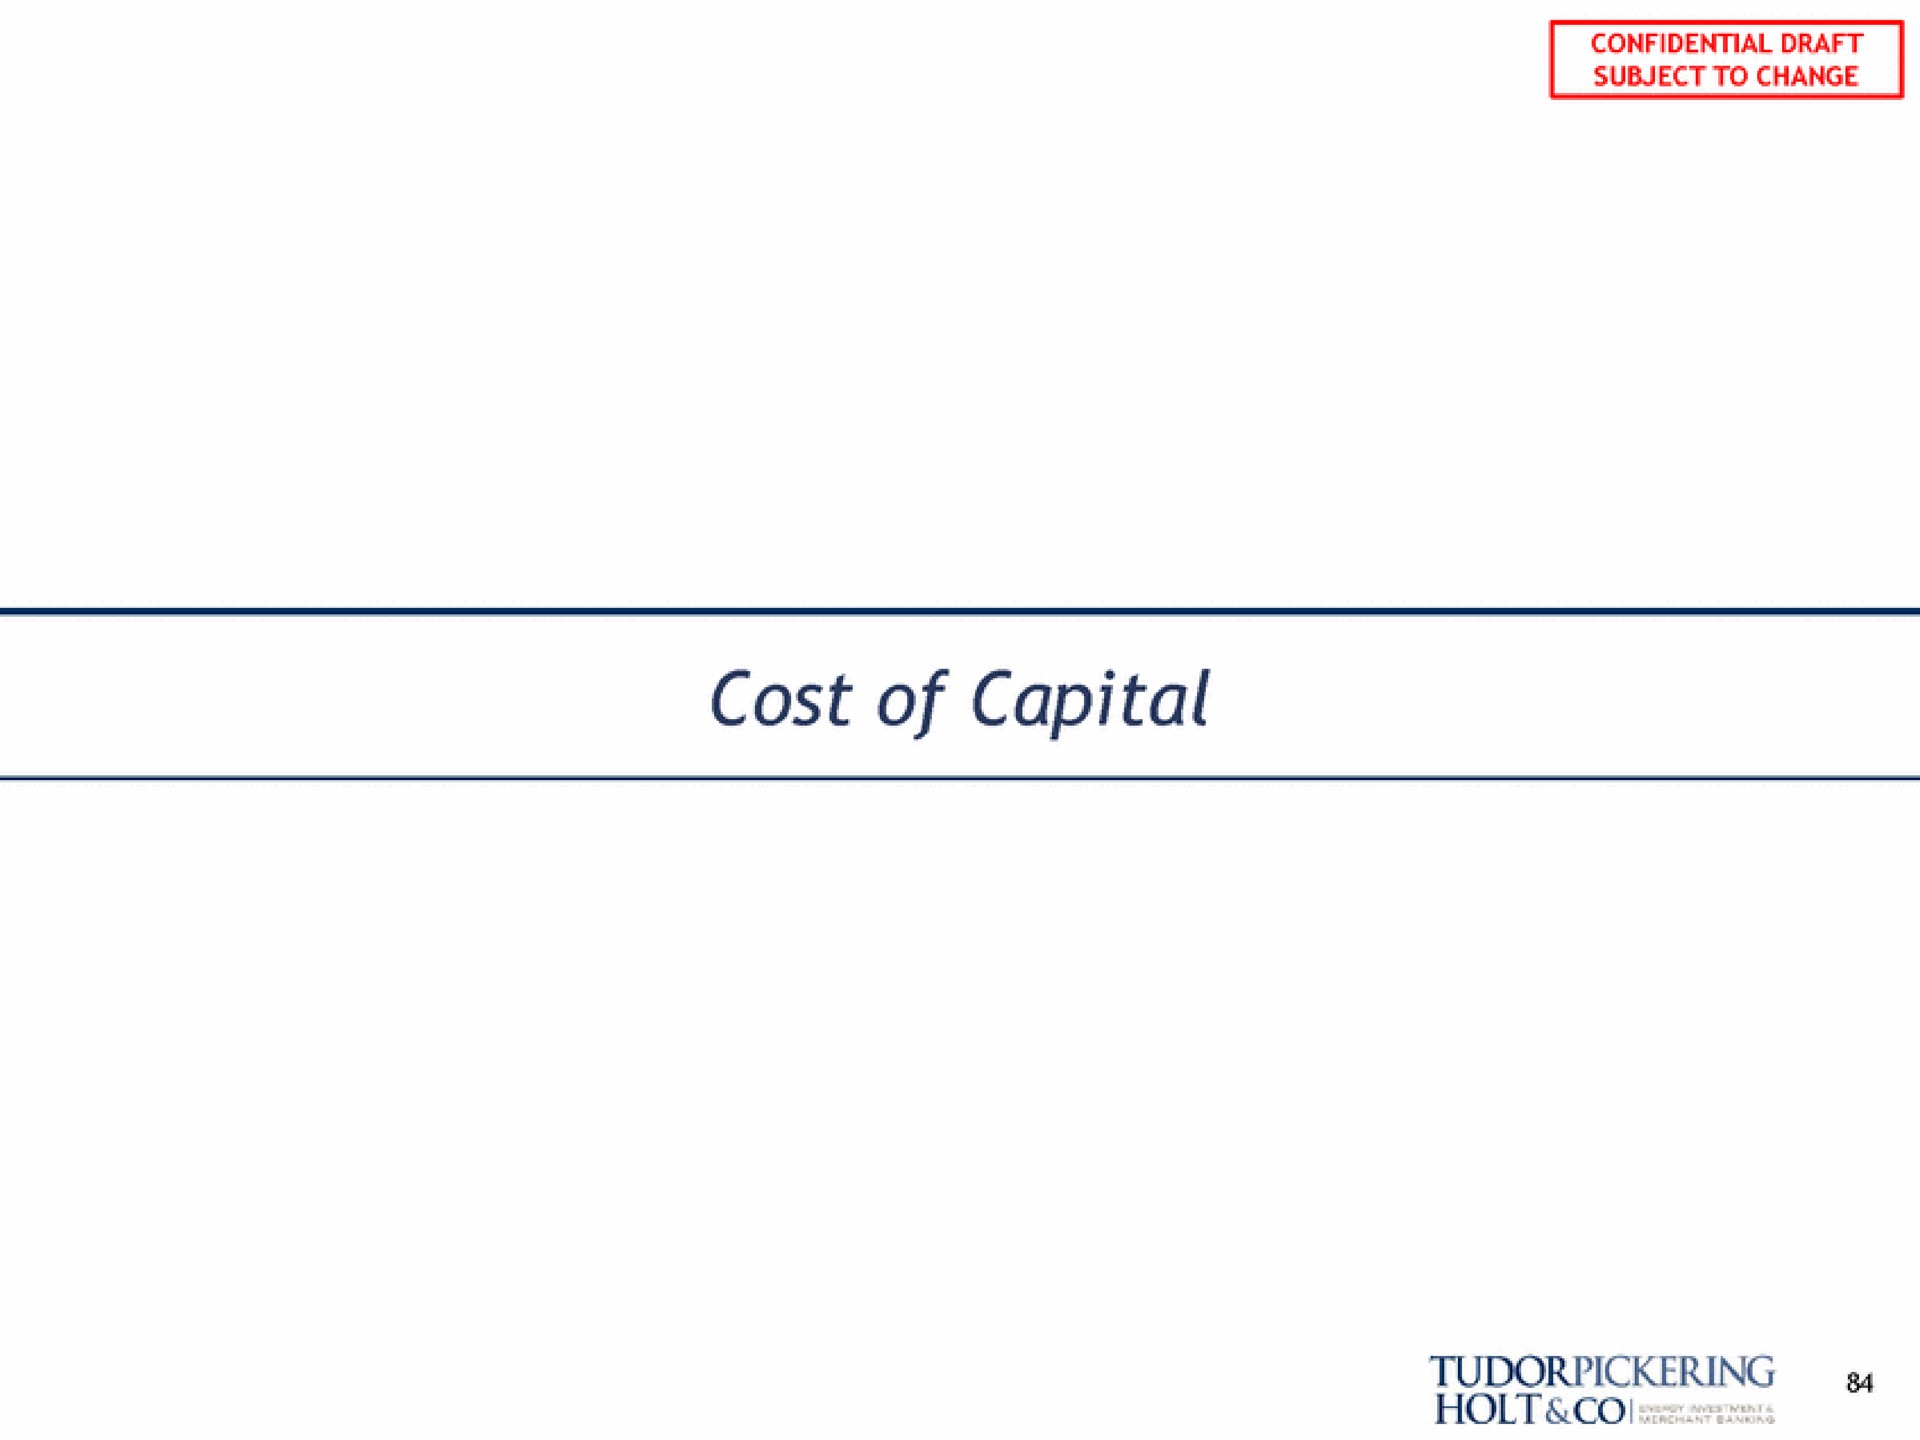 cost of capital | Tudor, Pickering, Holt & Co